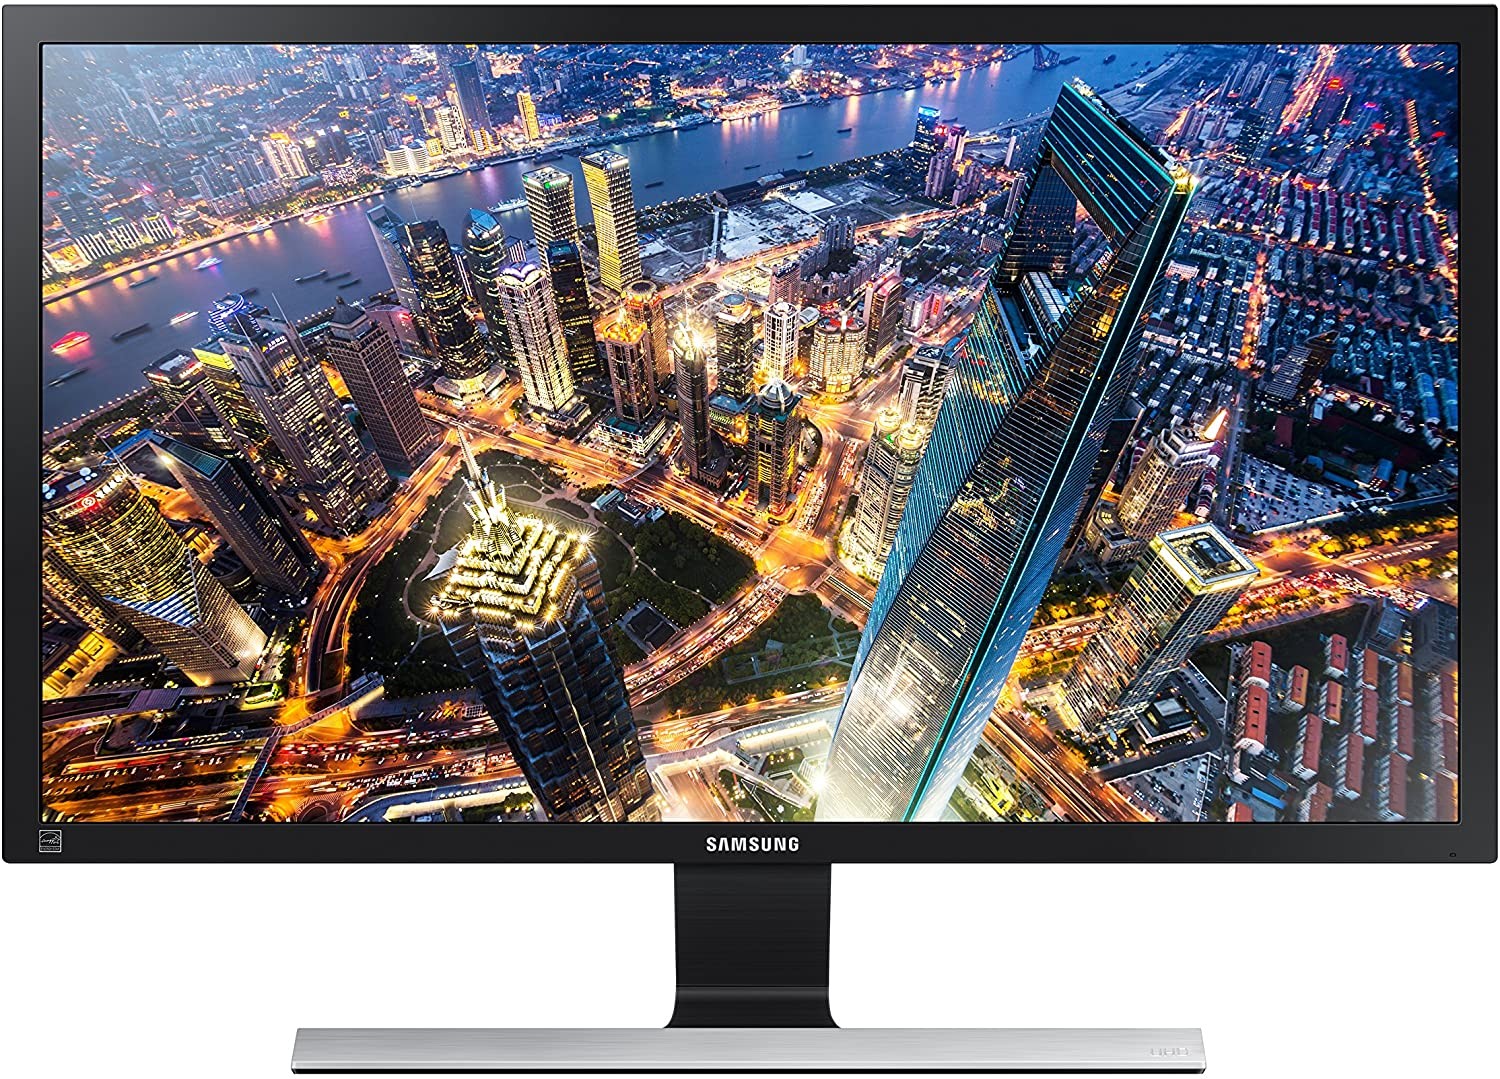 Samsung U28E590D 28" 4K UHD LED Monitor UE590